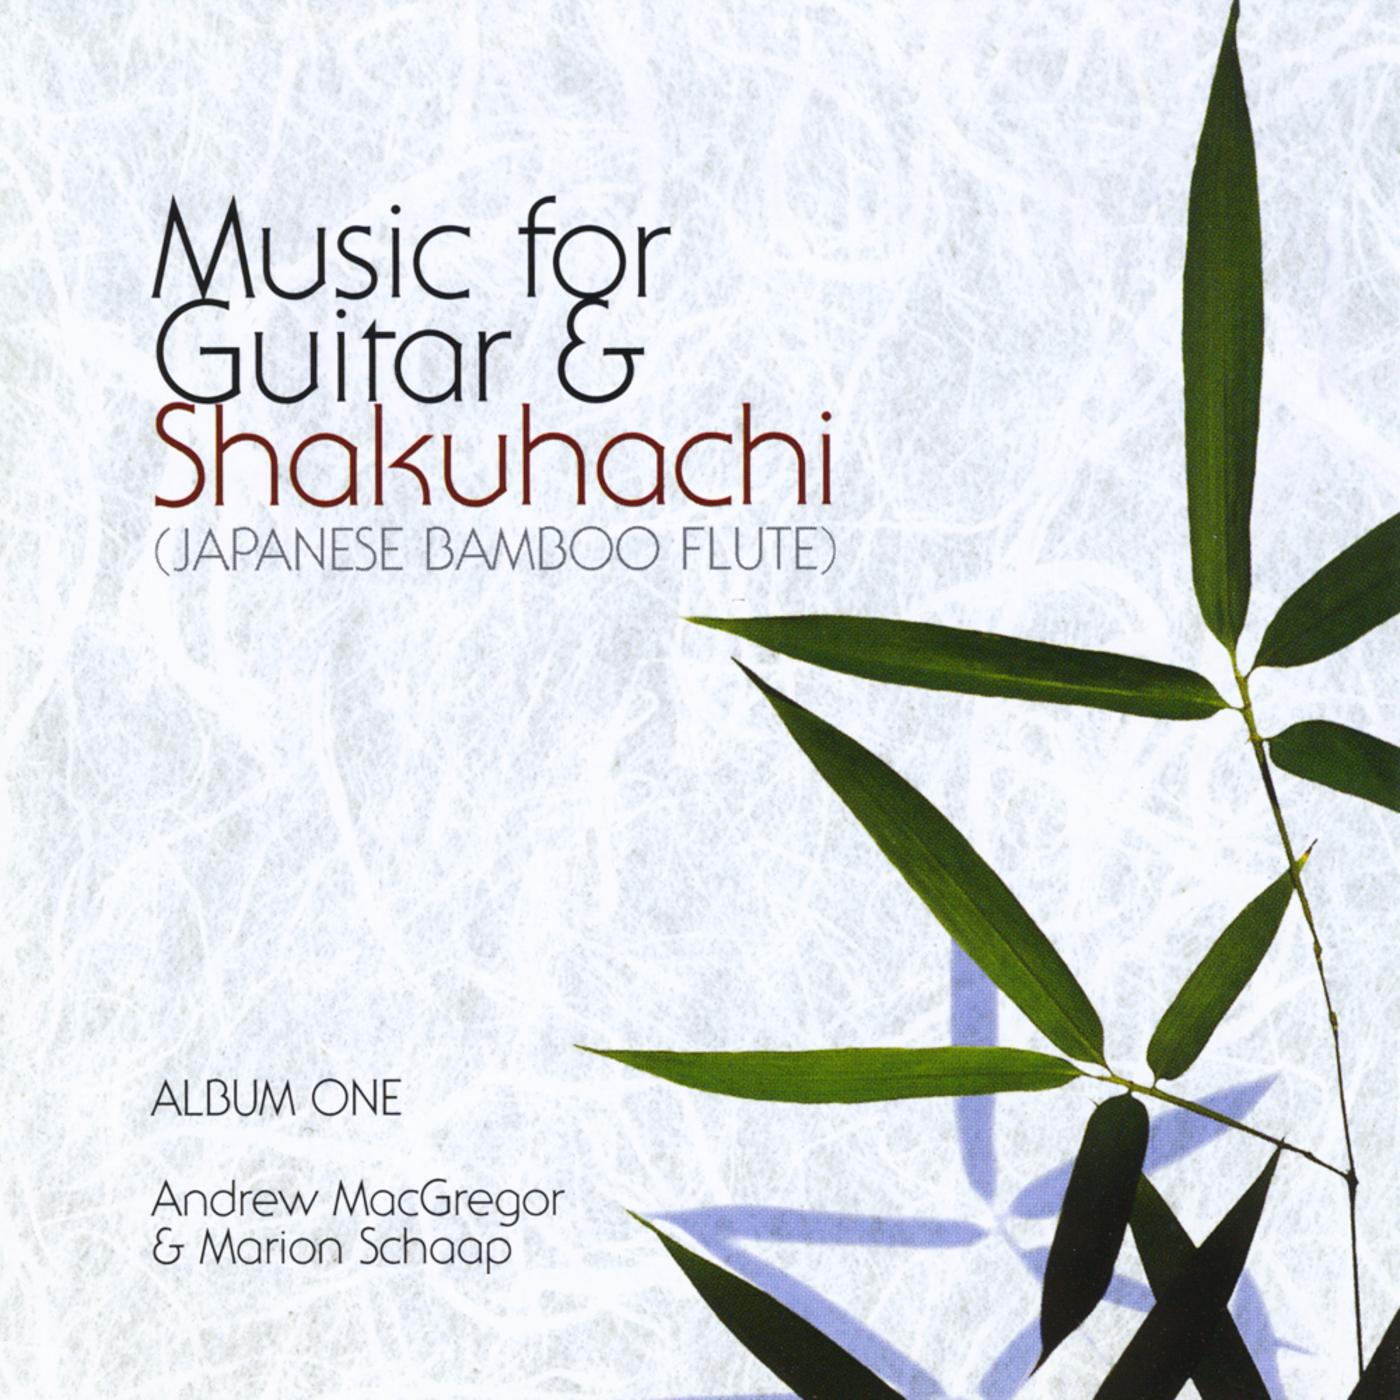 Music for Guitar & Shakuhachi - Album One